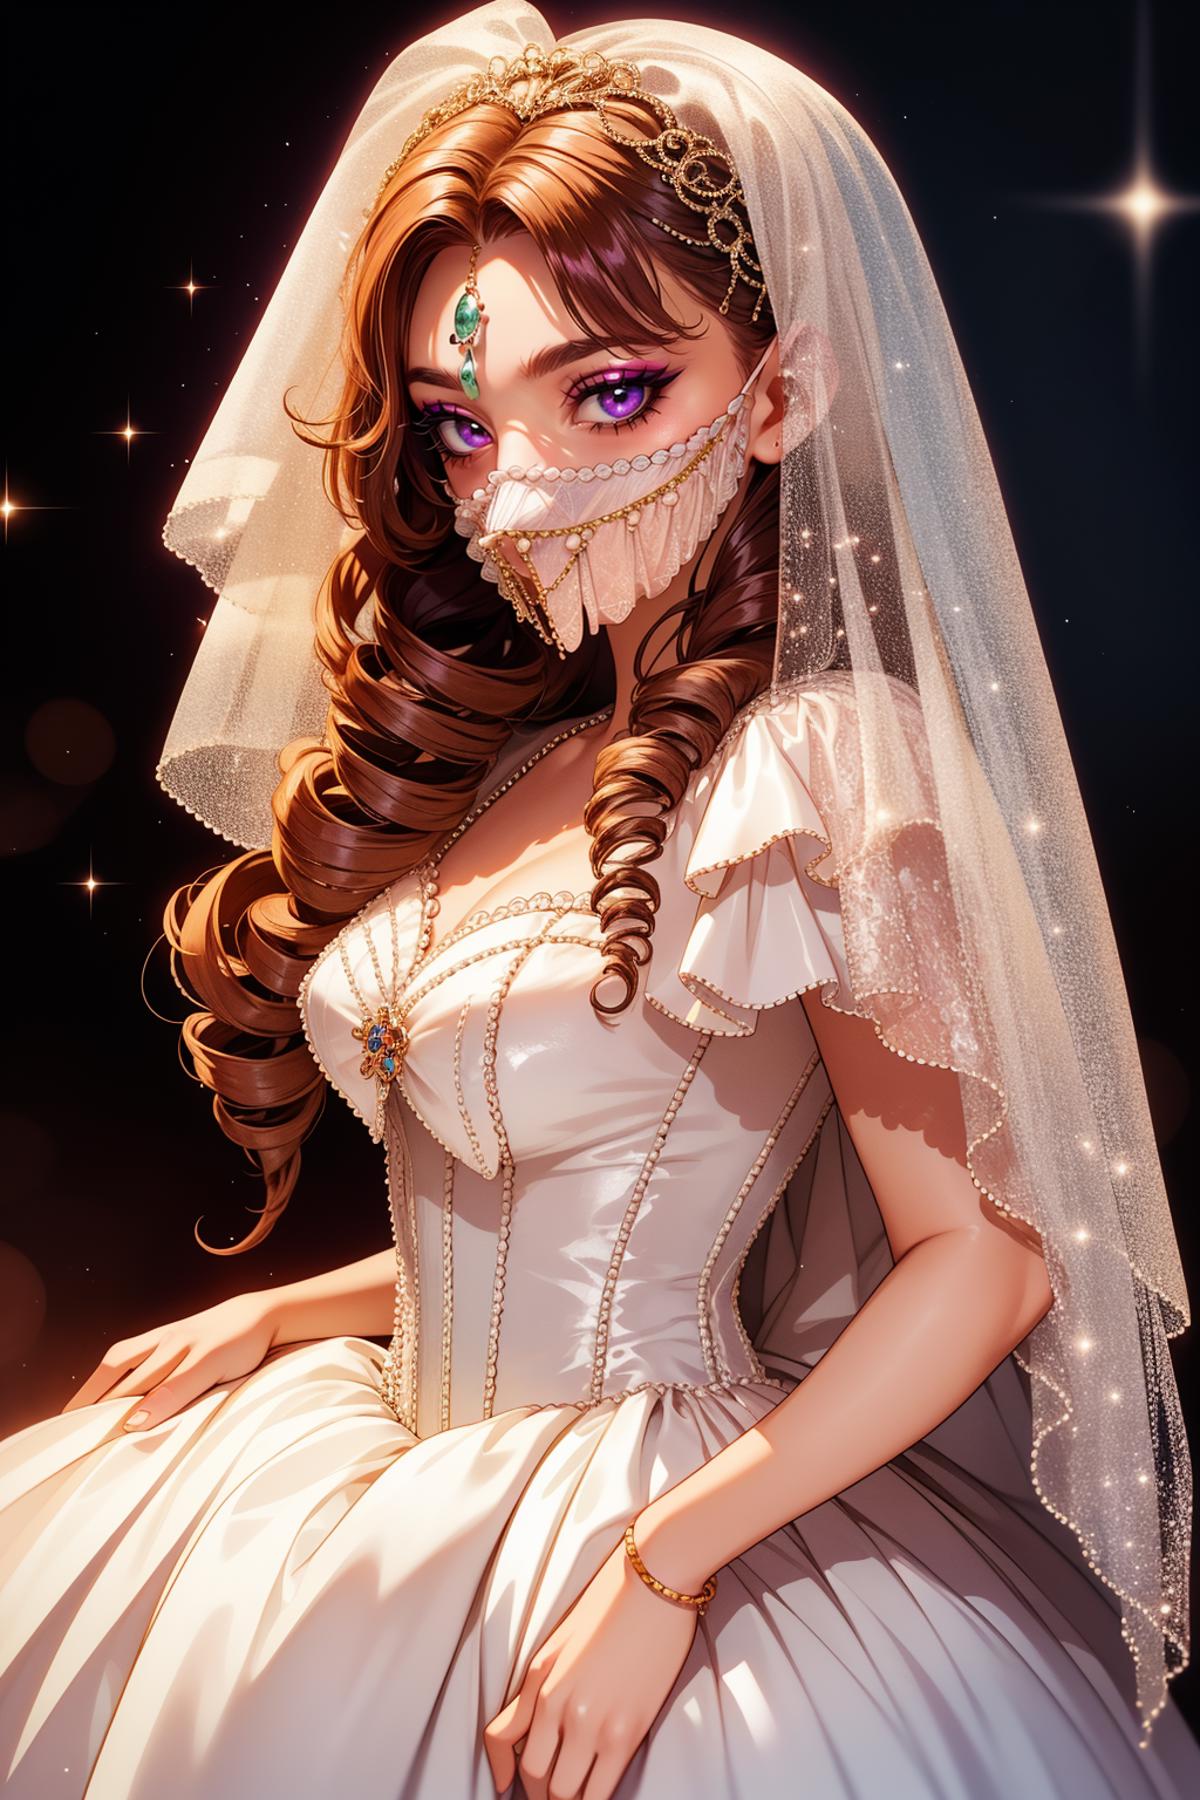 Glitter Wedding Dress image by Sophorium